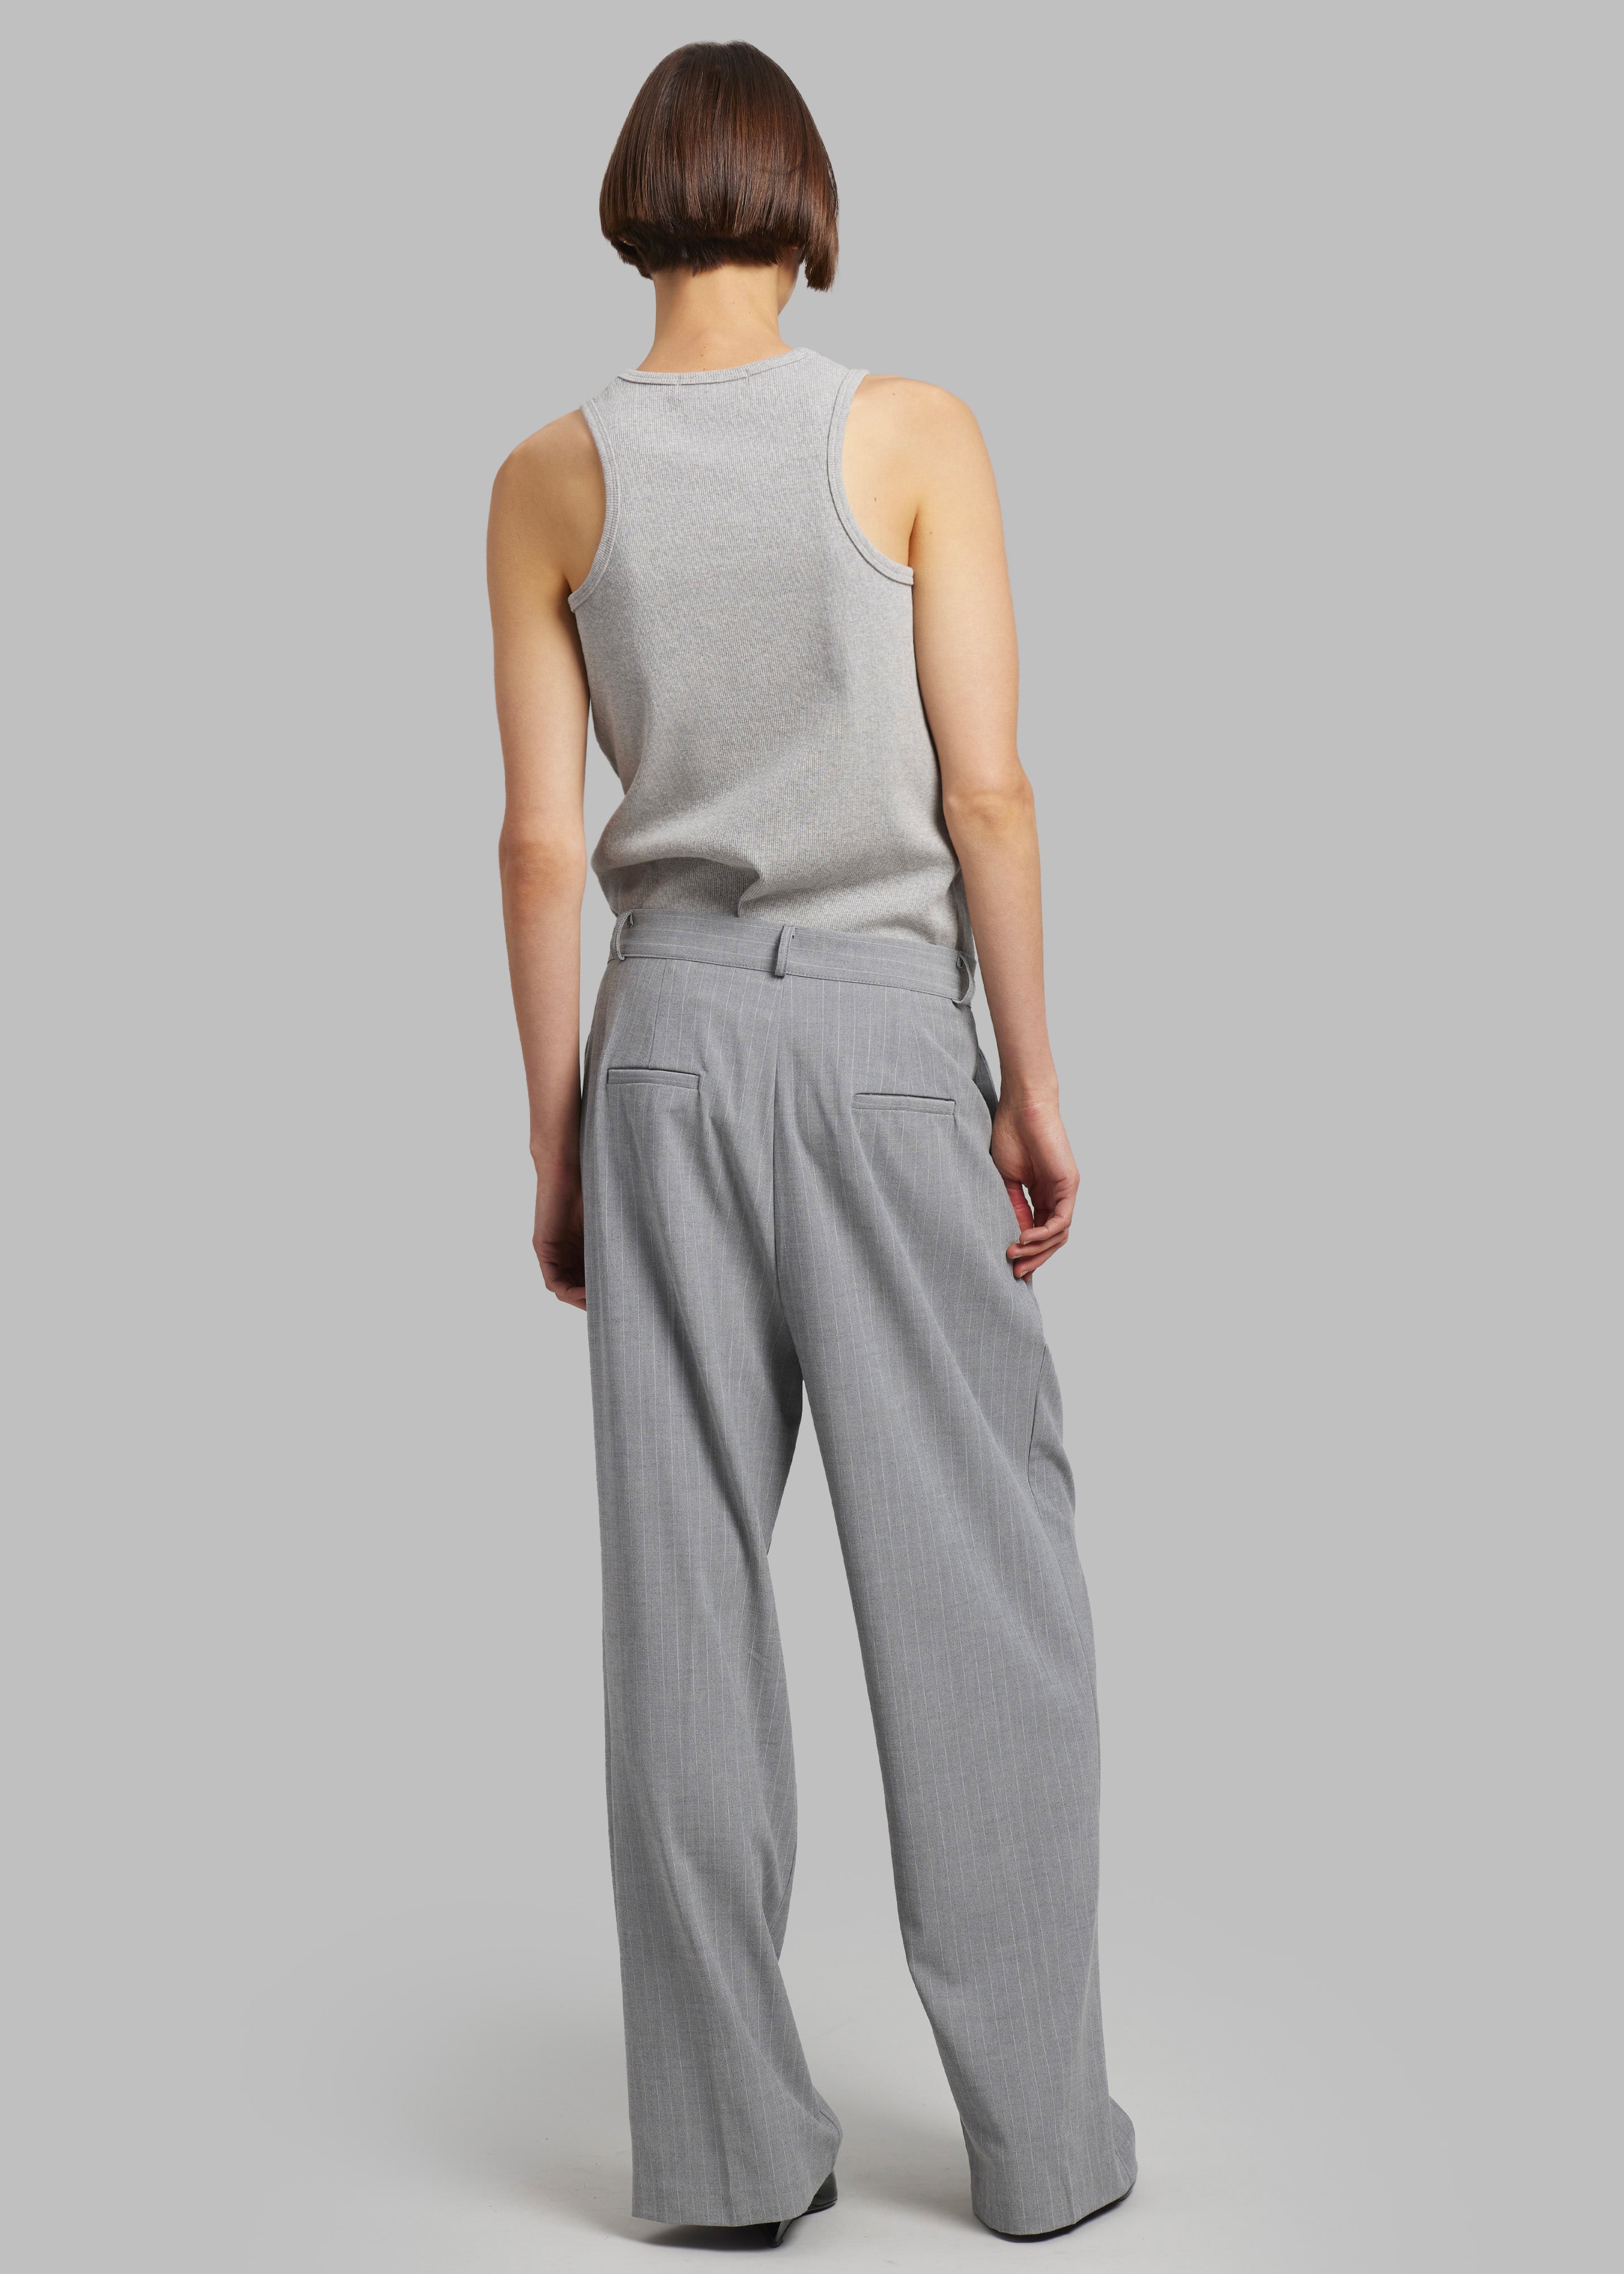 Sybil Trousers - Grey Pinstripe - 7